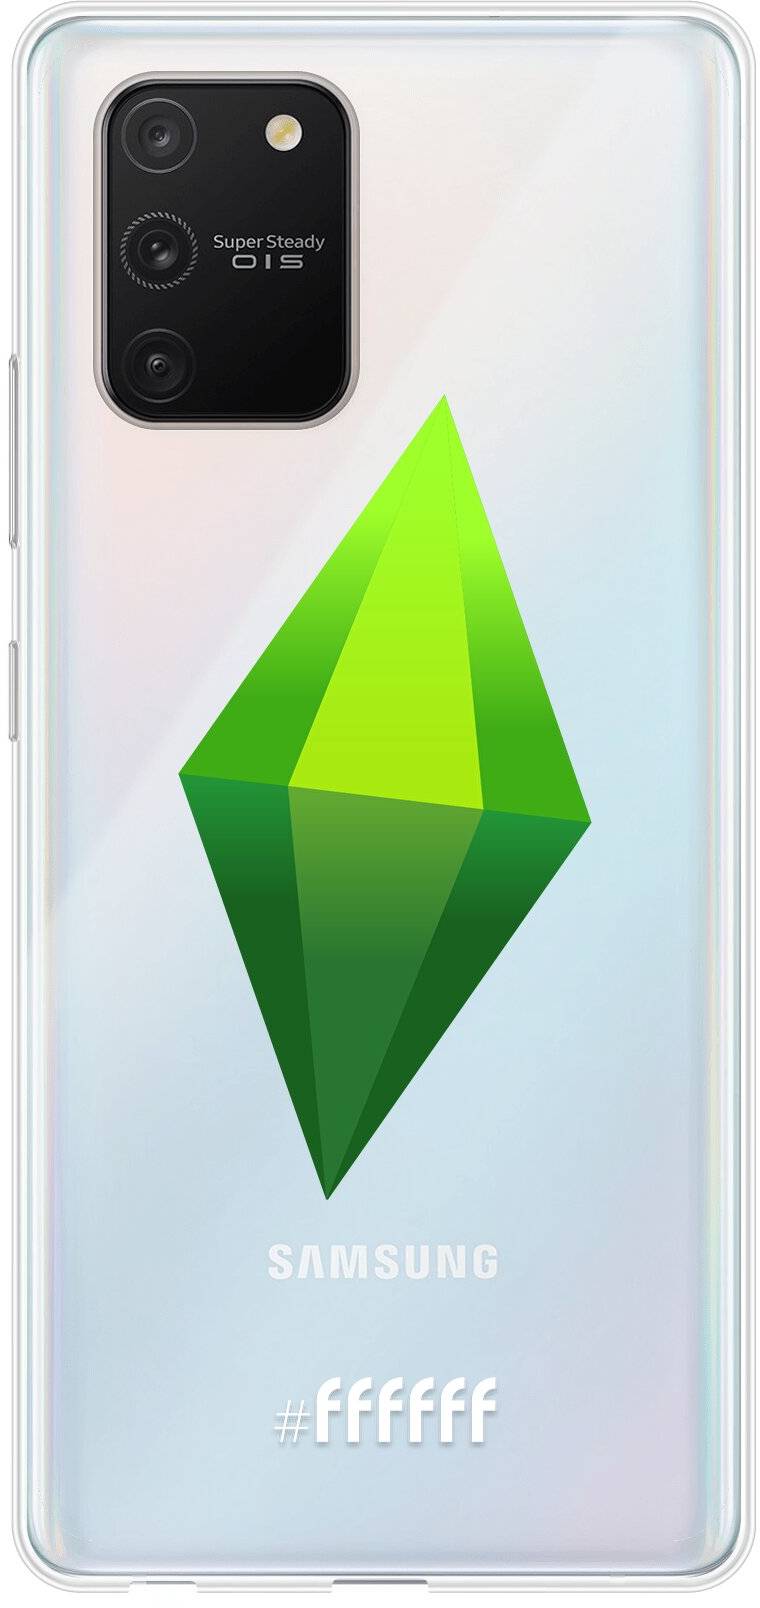 The Sims Galaxy S10 Lite